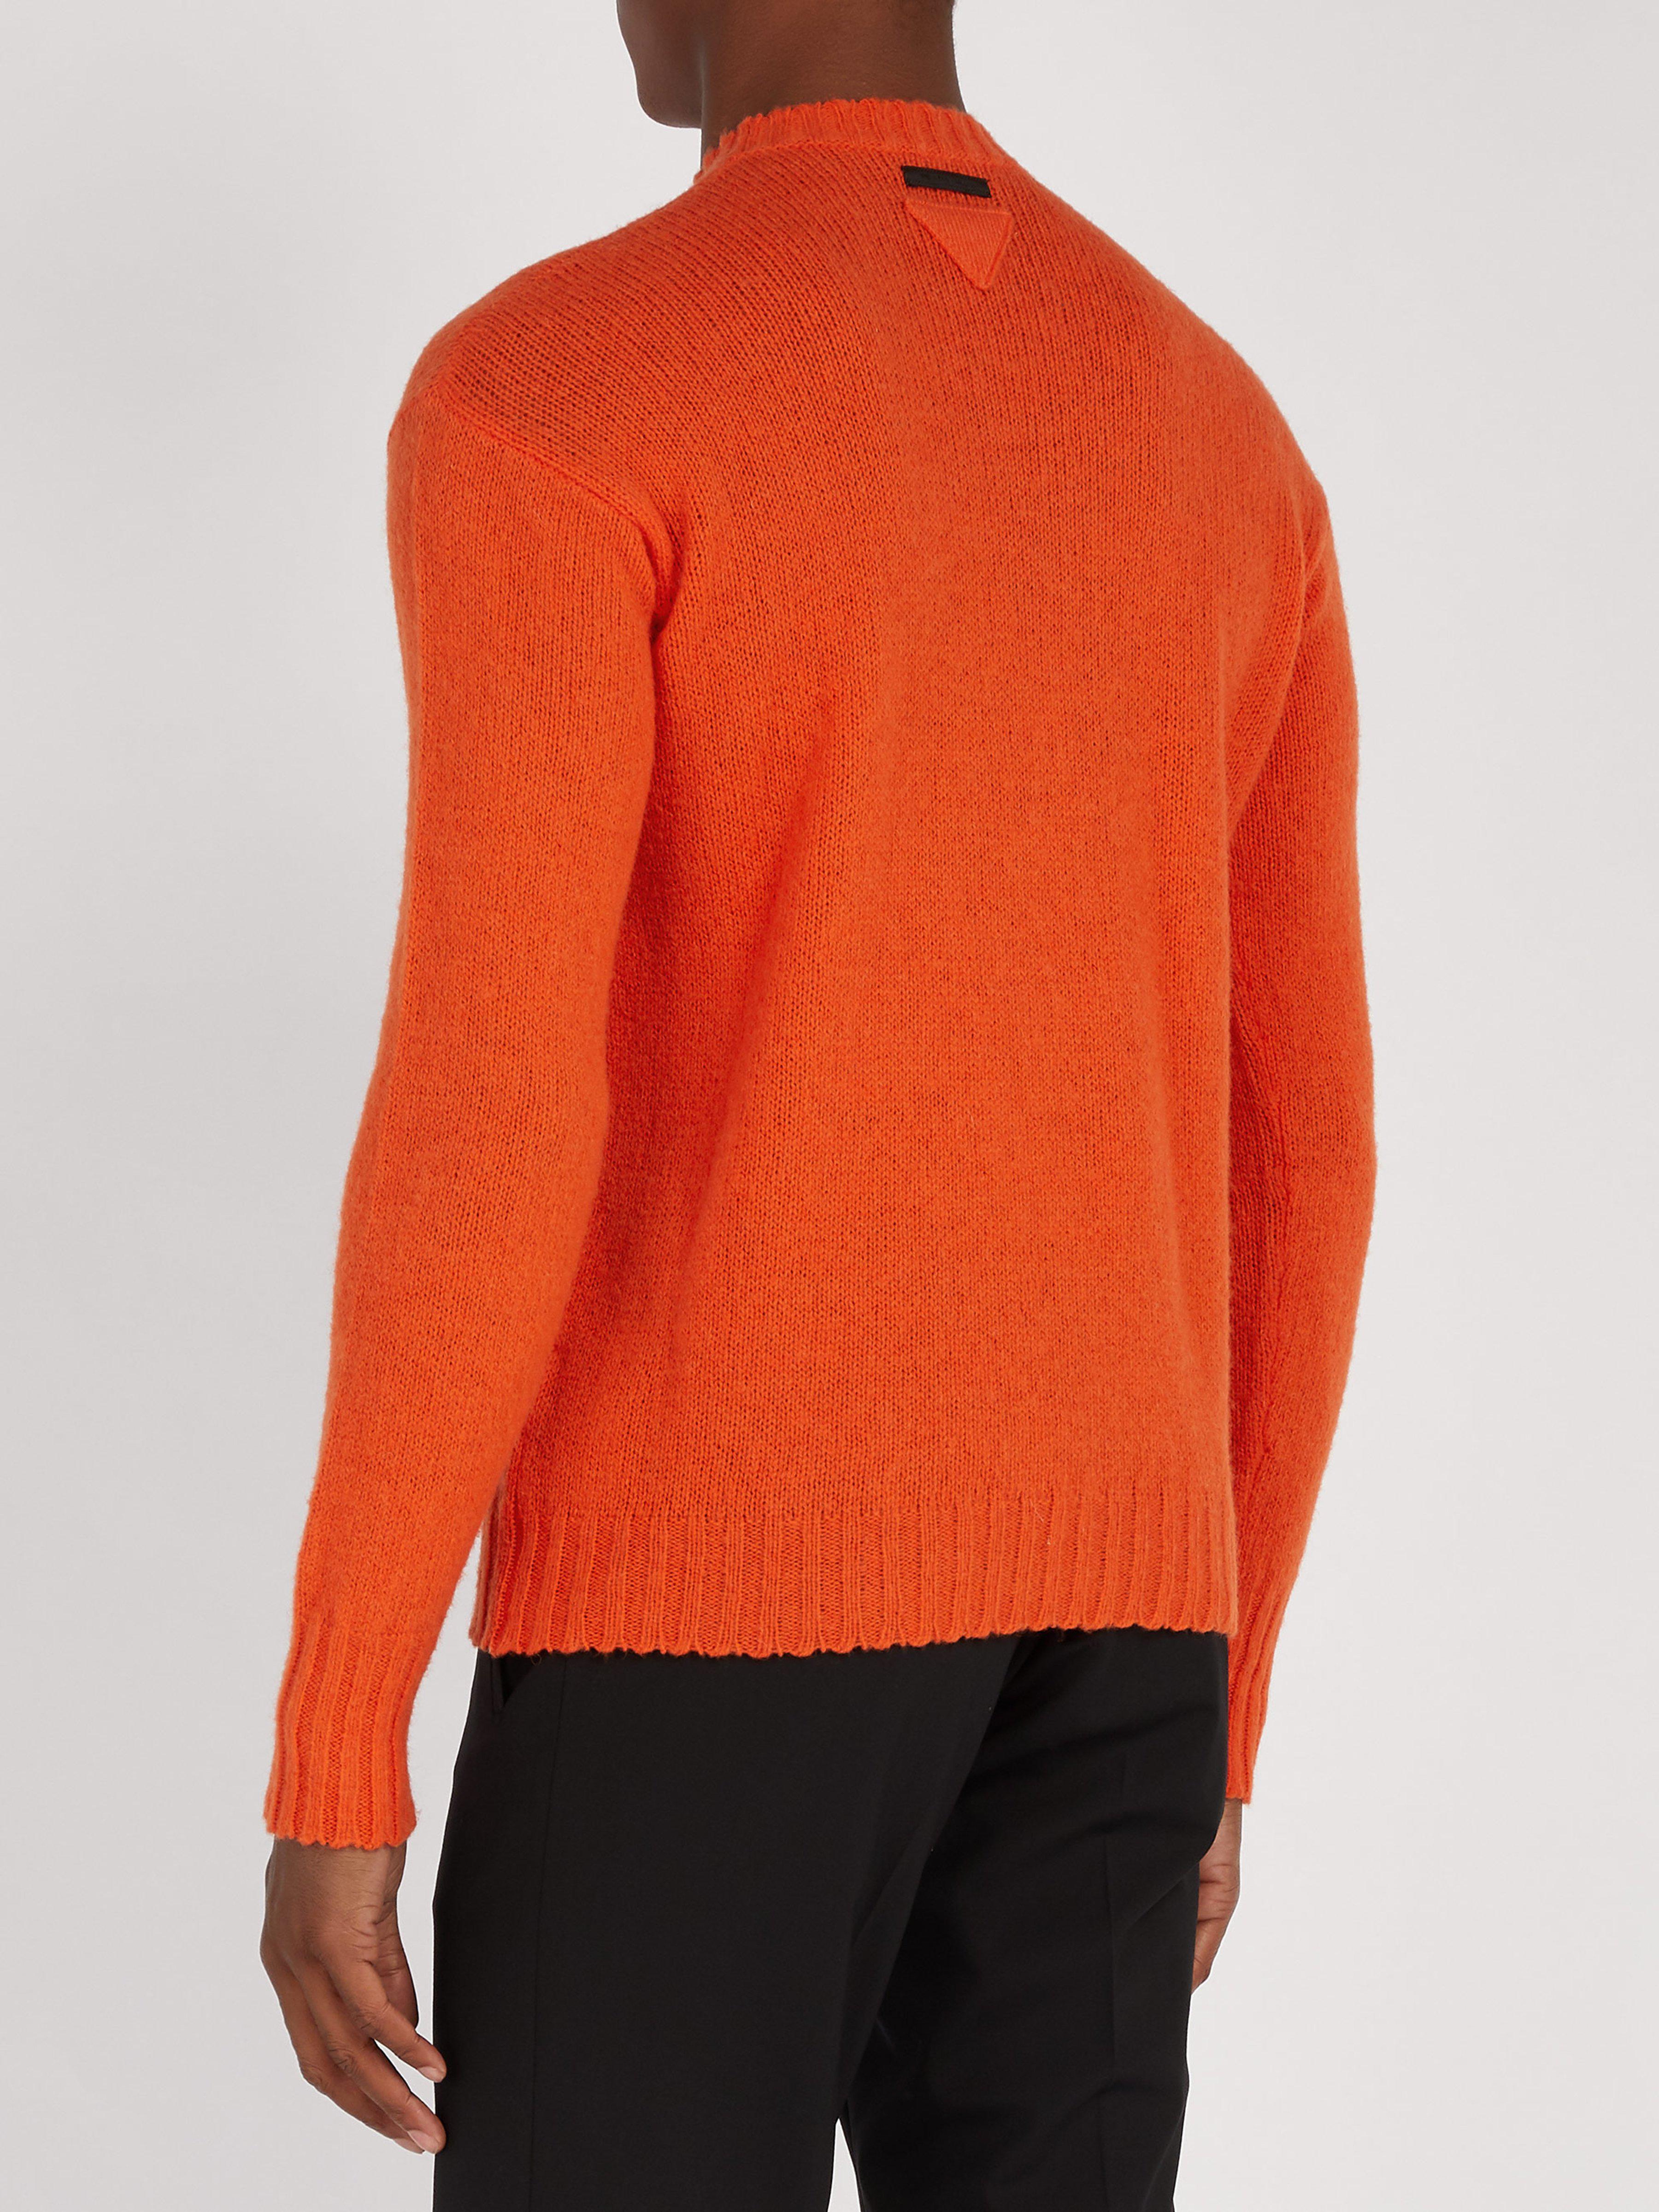 Prada Dinosaur Wool Sweater in Orange for Men - Lyst